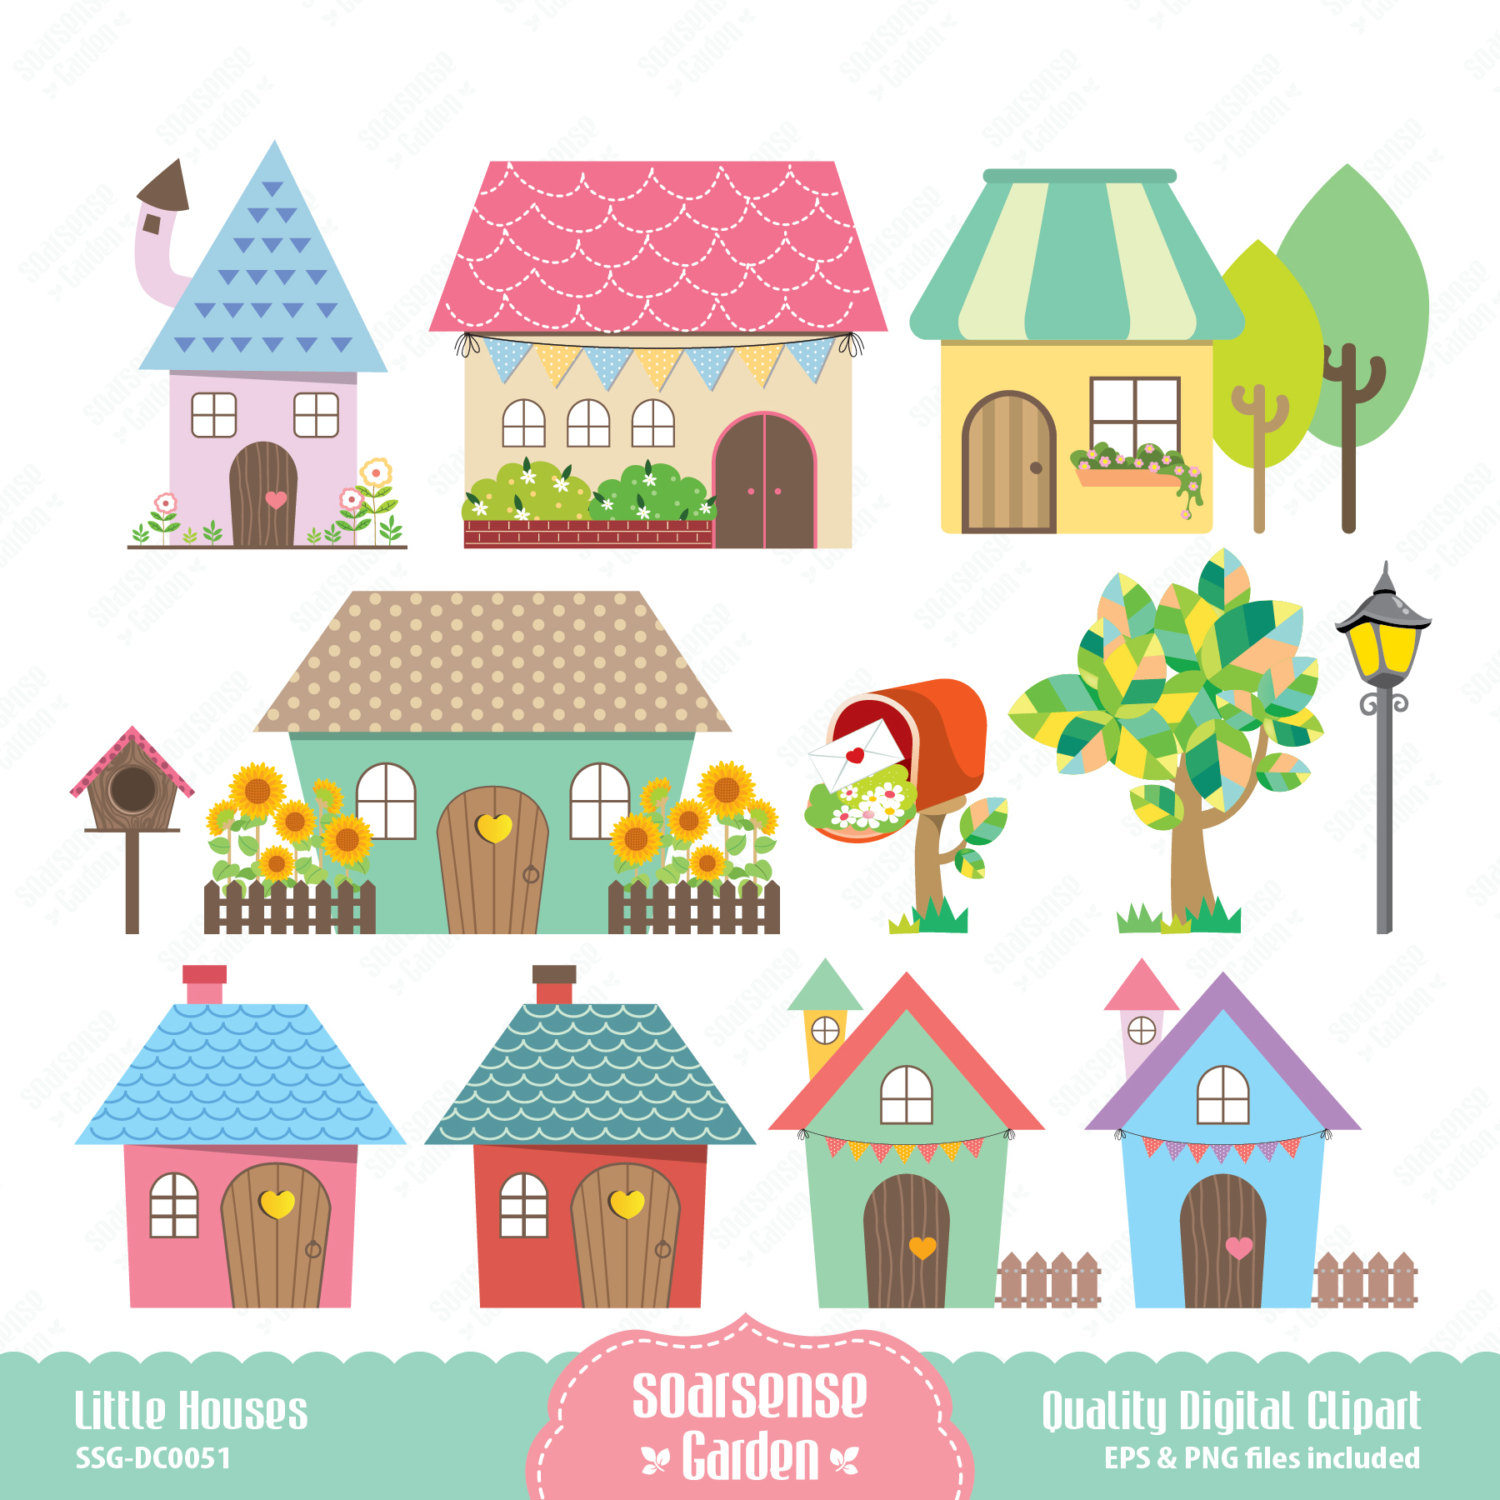 Little Houses Digital Clipart Home Clip Art February 08 2014 At 12